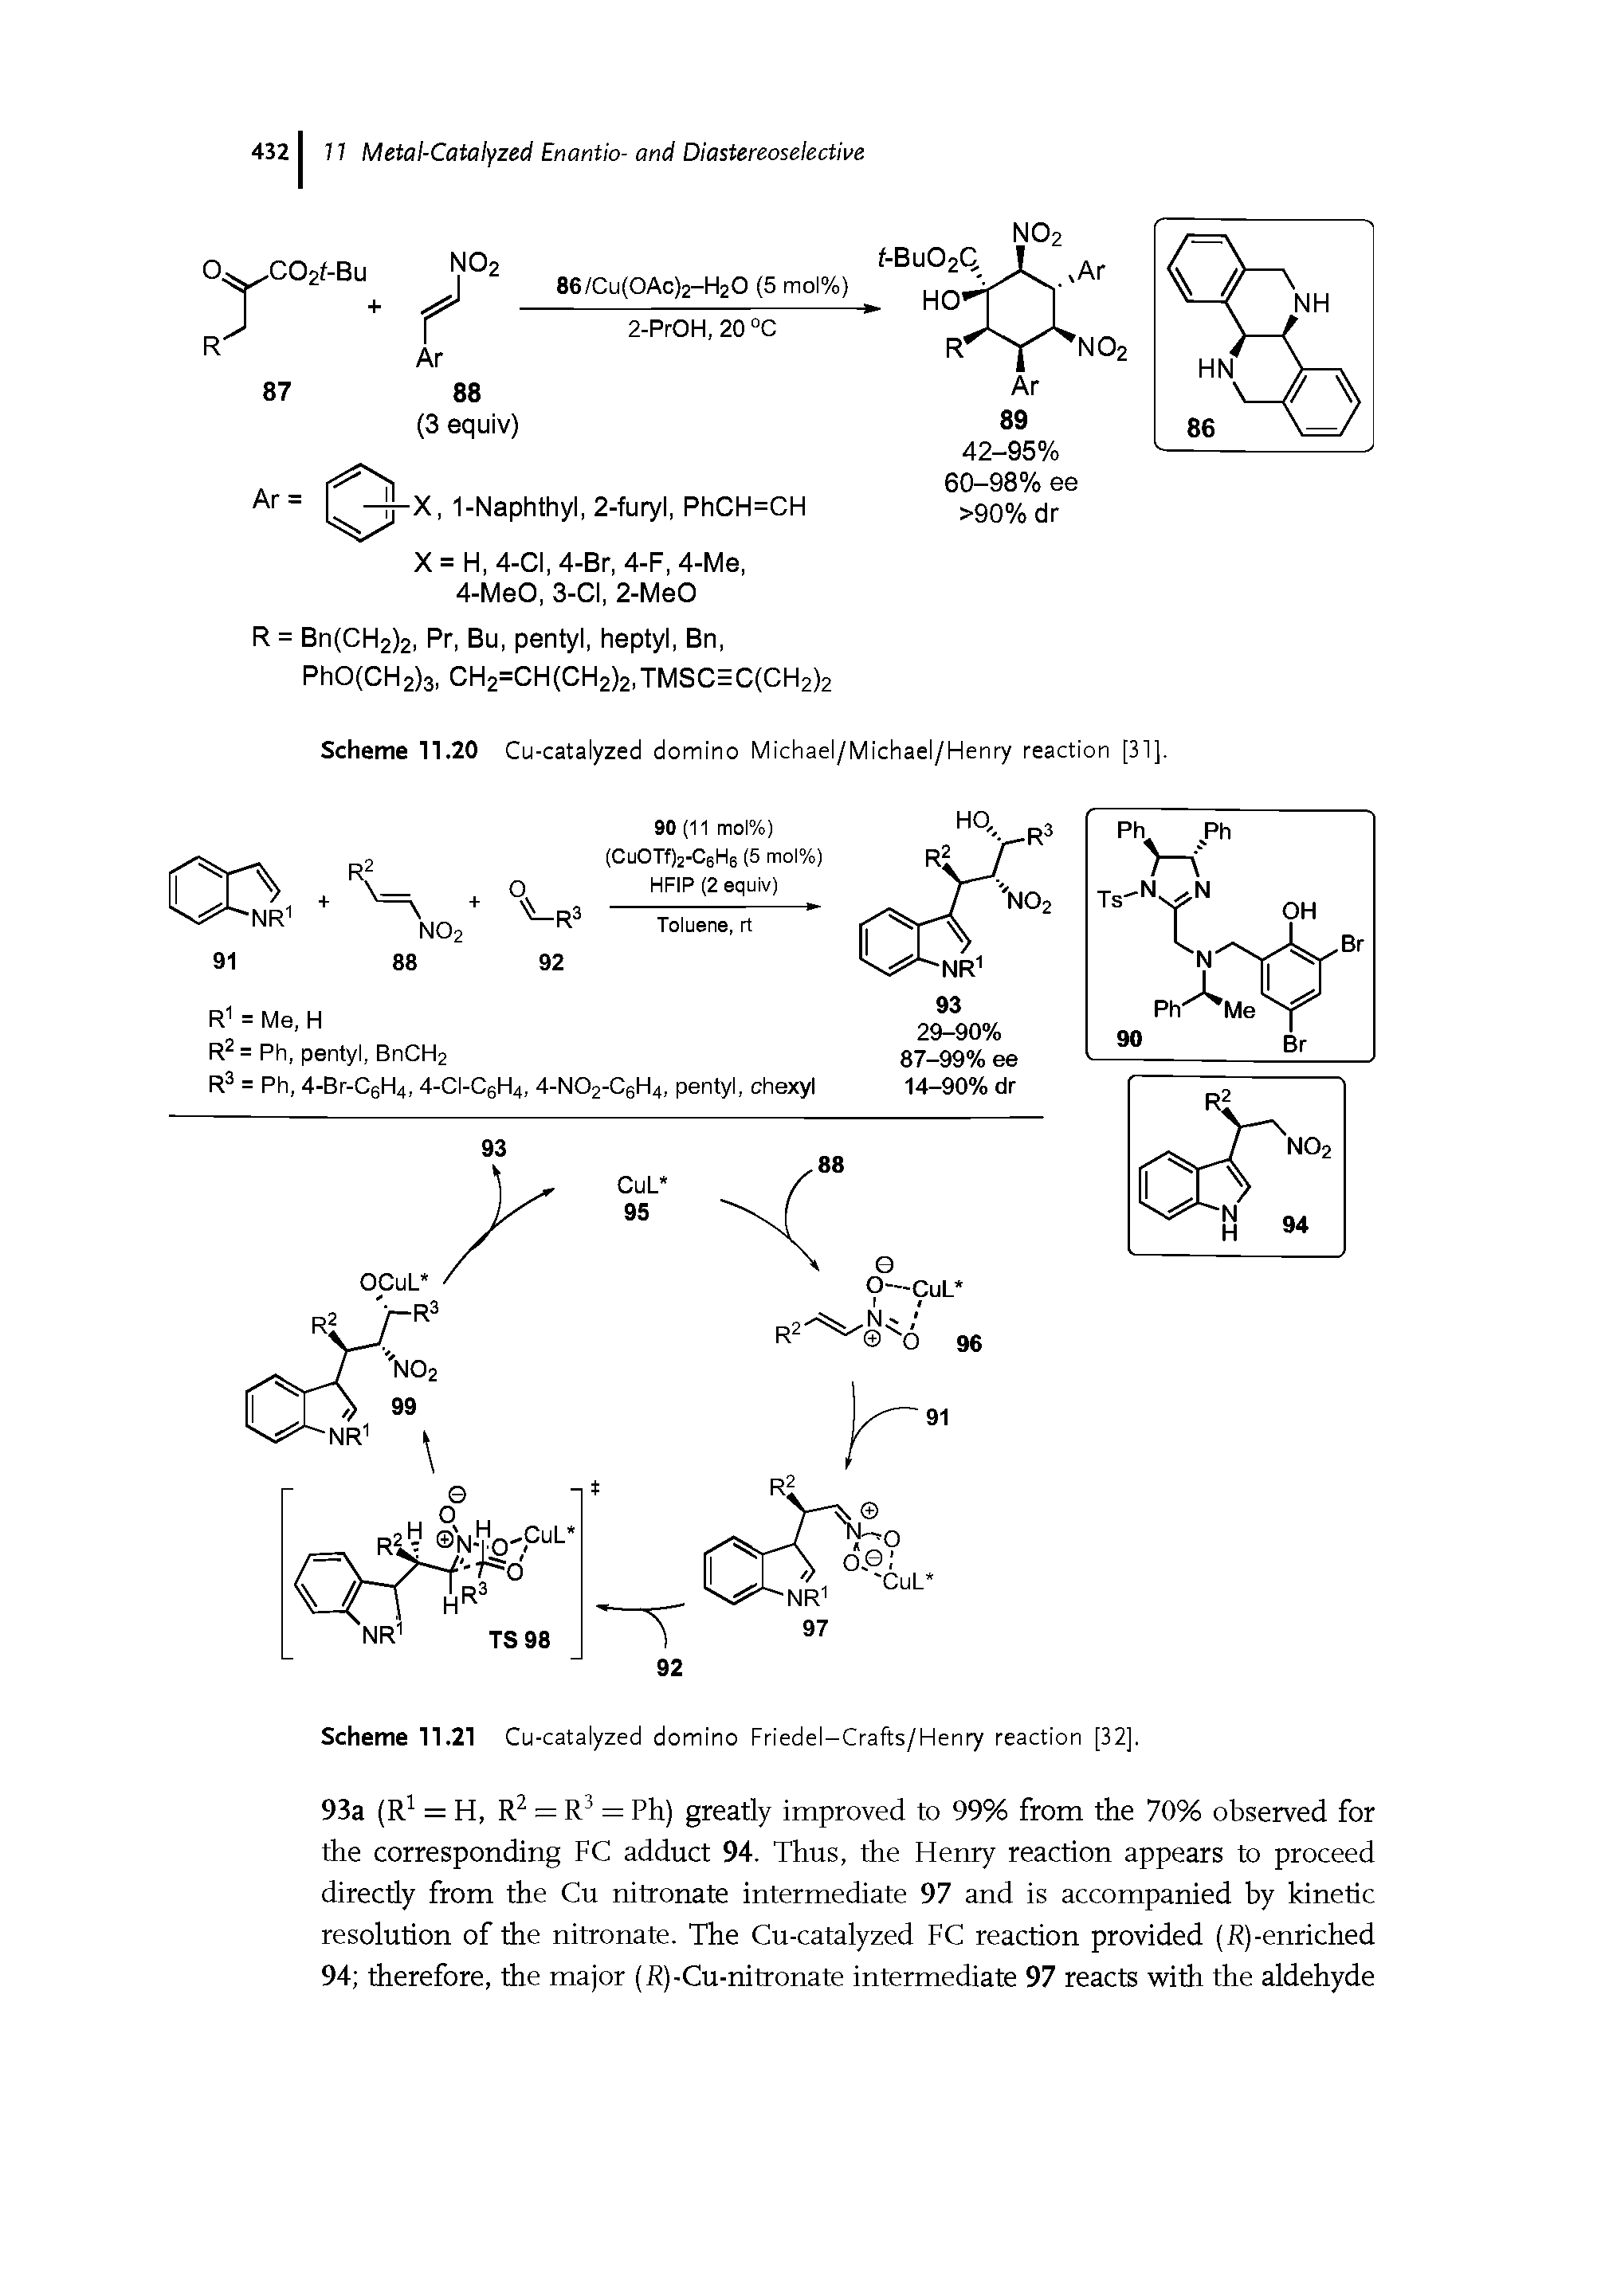 Scheme 11.20 Cu-catalyzed domino Michael/Michael/Henry reaction [31].